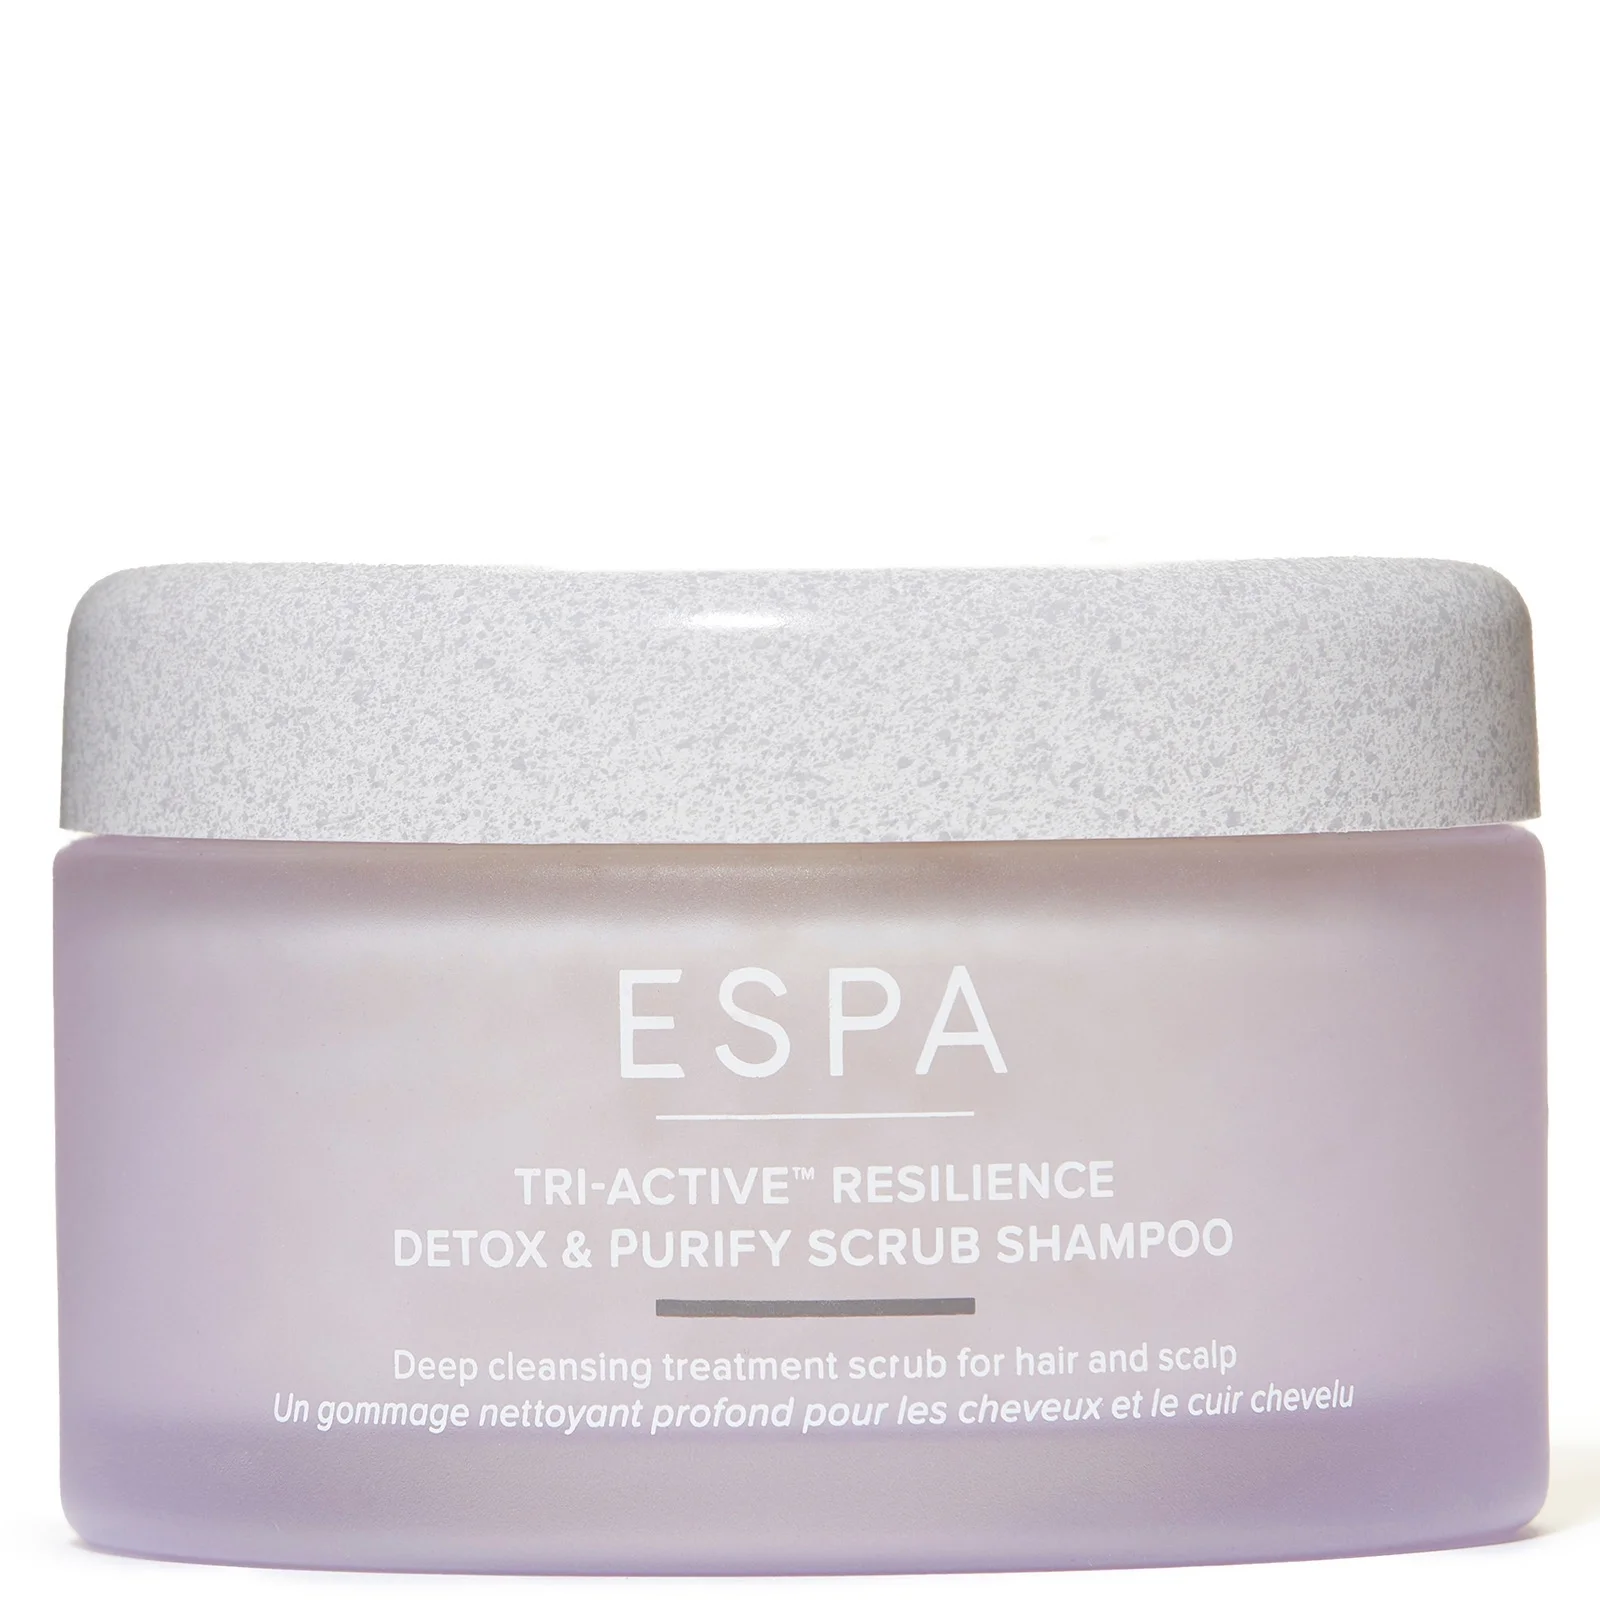 ESPA Tri-Active Resilience Detox and Purify Scrub Shampoo 190ml Image 1